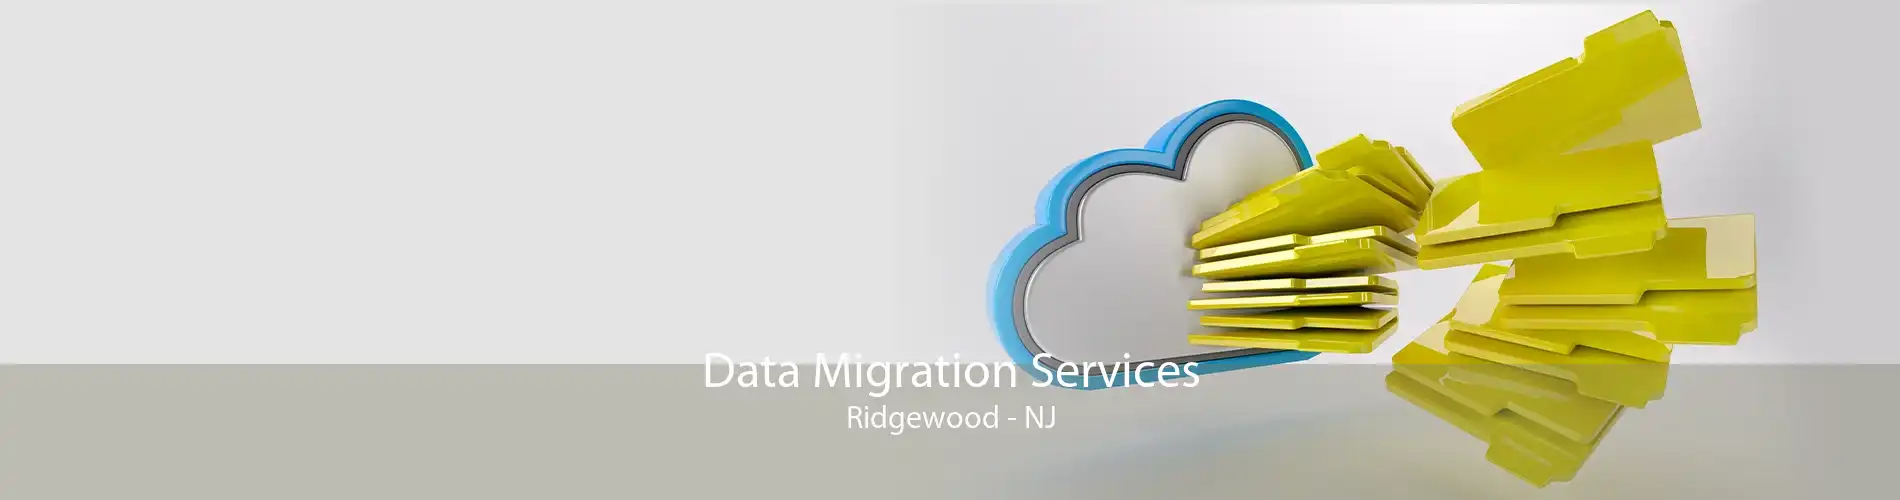 Data Migration Services Ridgewood - NJ